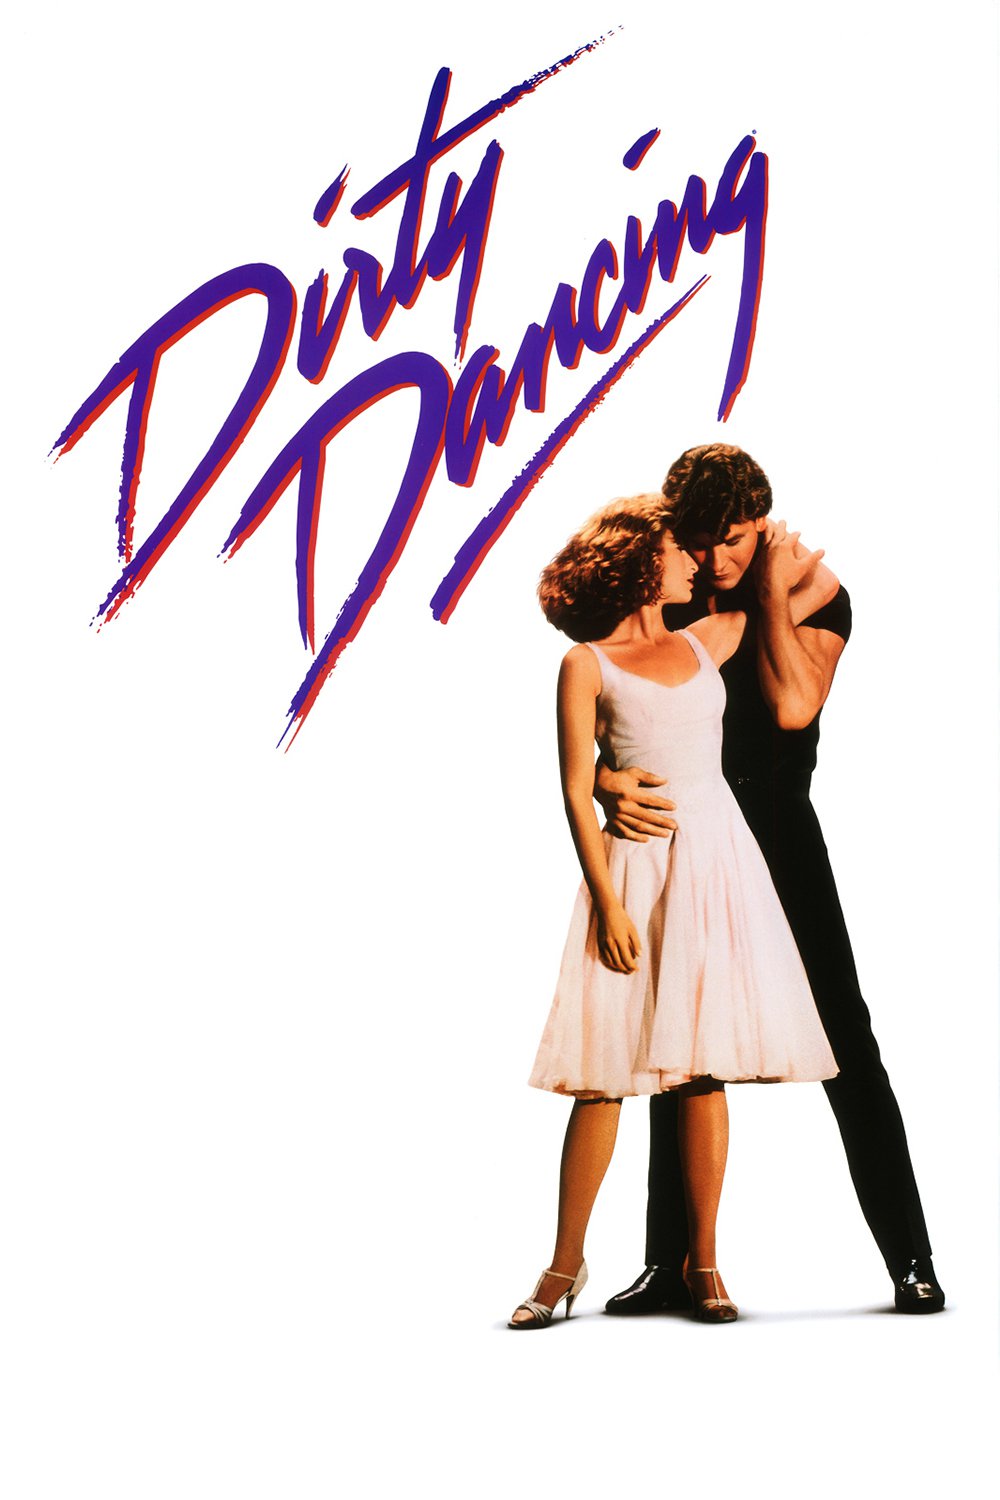 Plakat von "Dirty Dancing"